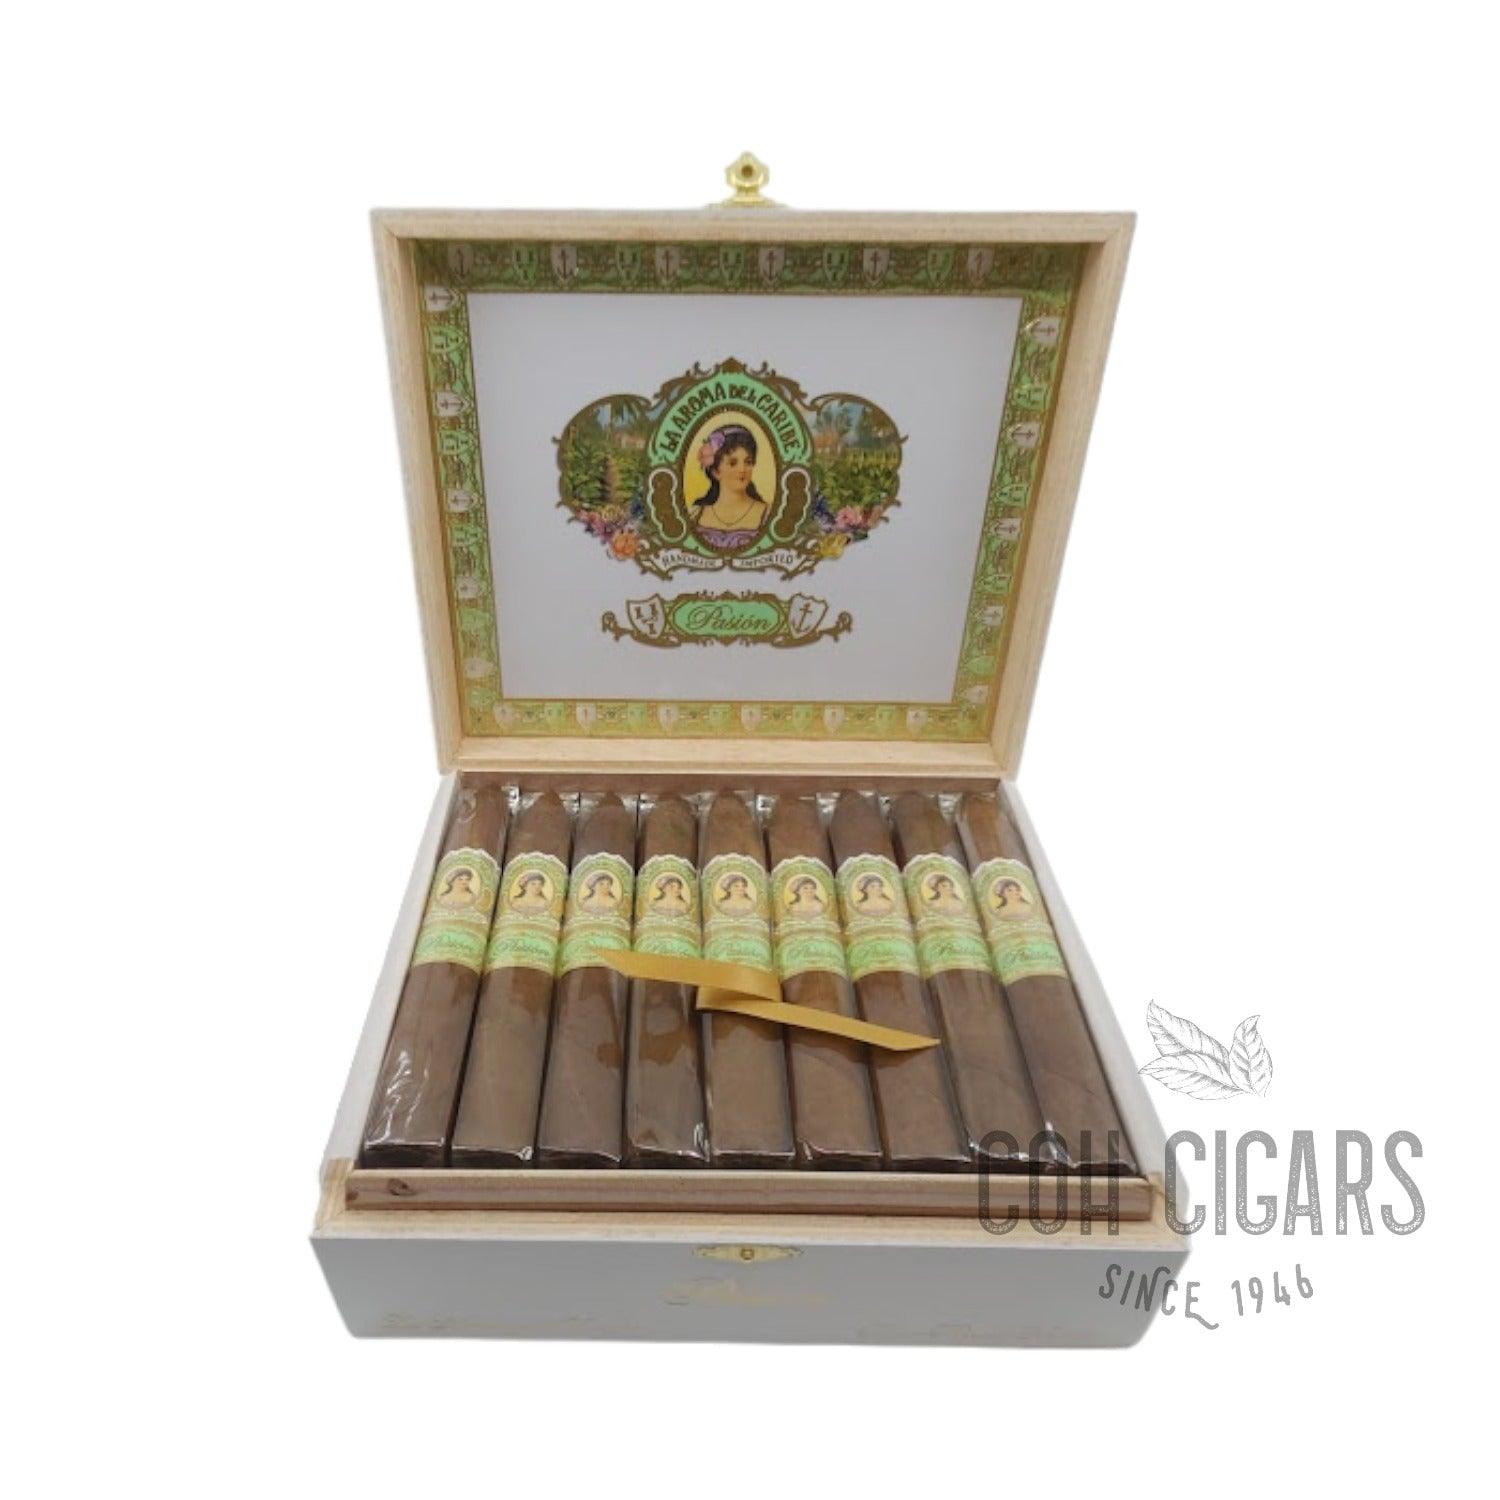 La Aroma del Caribe Cigar | Pasion Box Pressed Torpedo | Box 25 - HK CohCigars